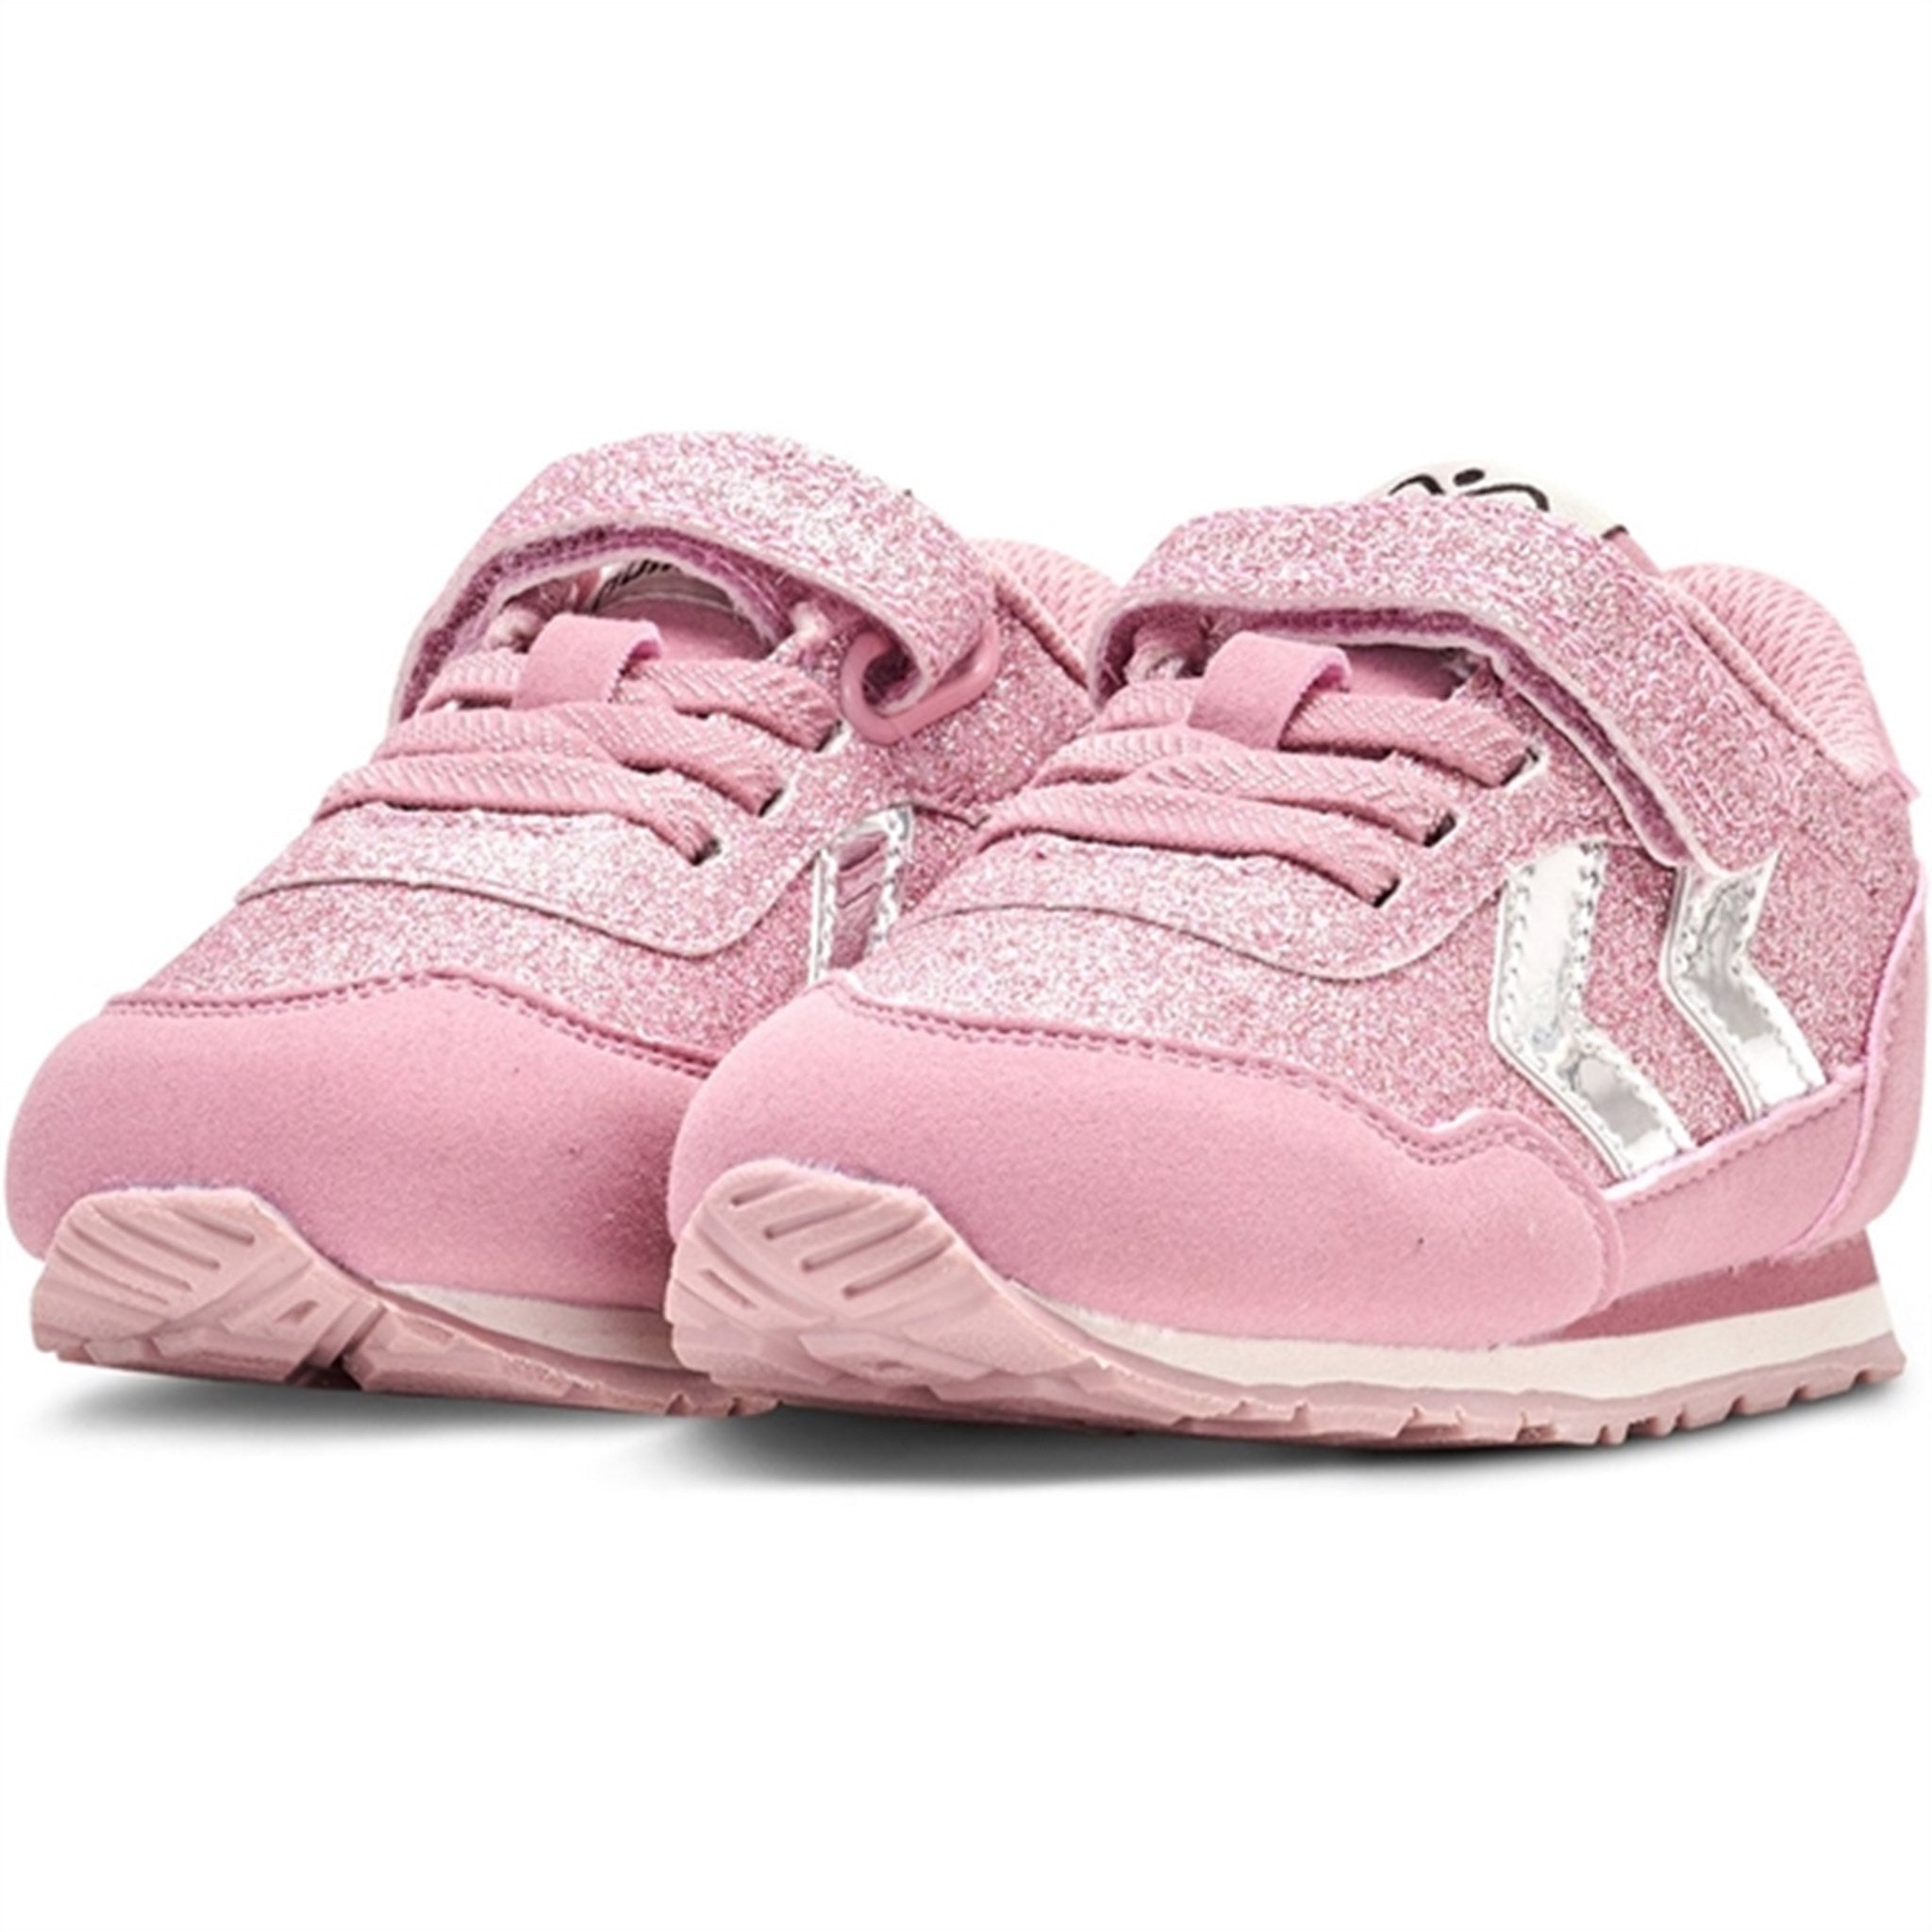 Hummel Reflex Glitter Infant Sneakers Zephyr 7